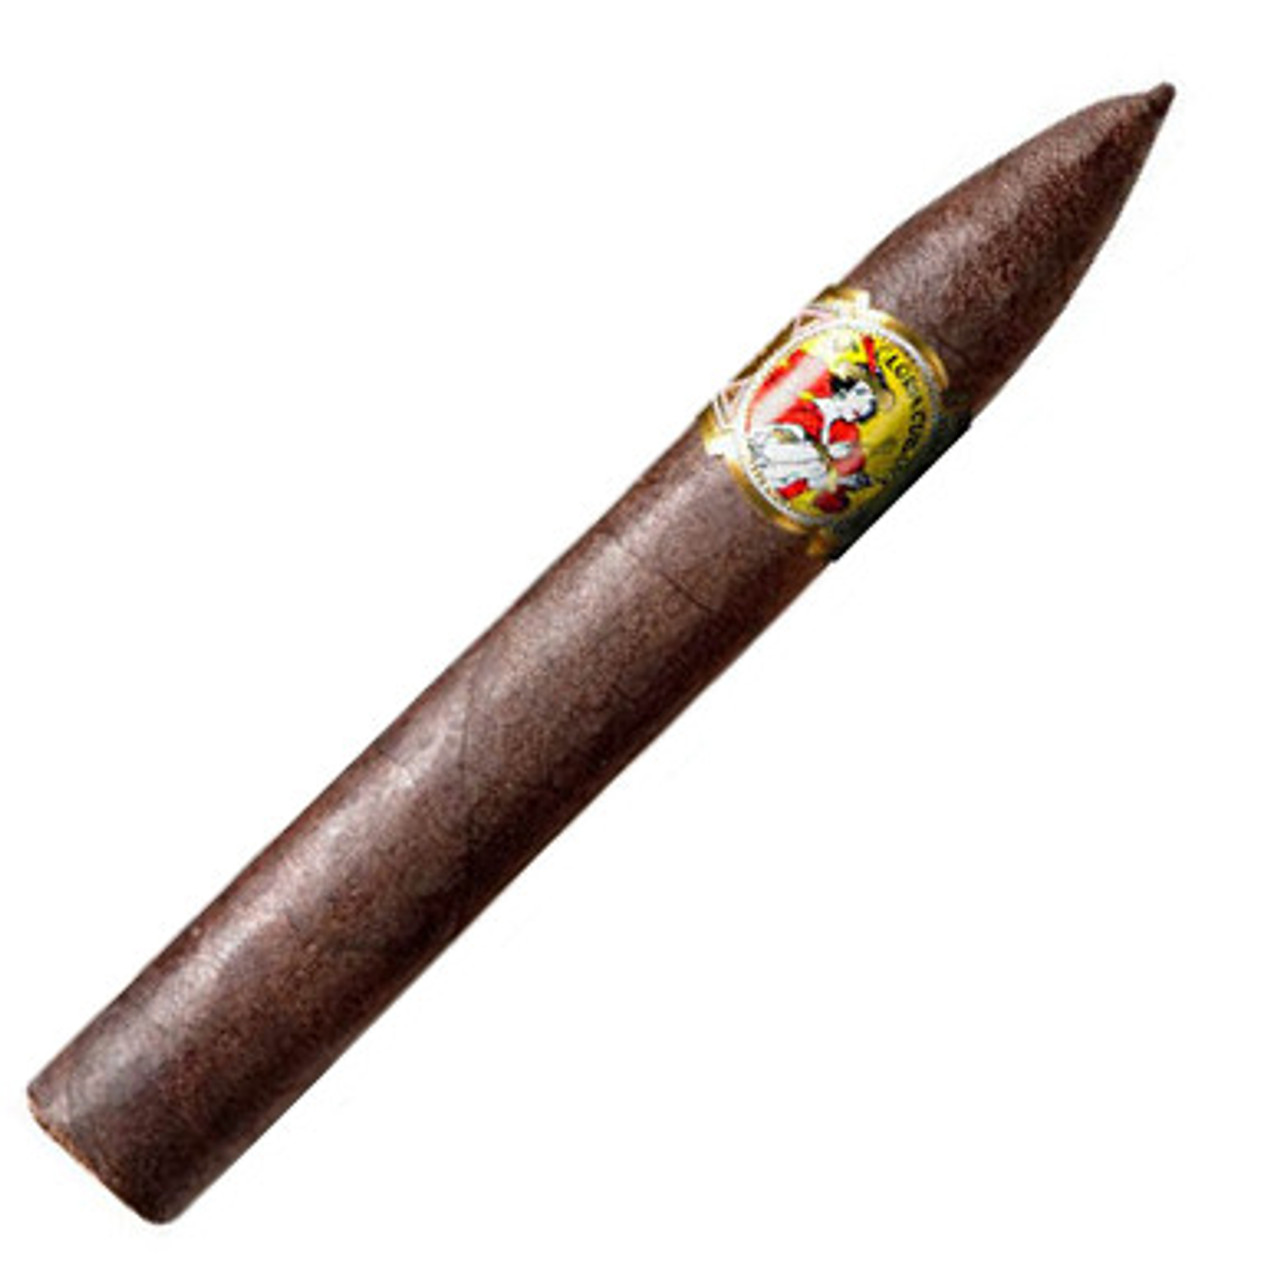 La Gloria Cubana Torpedo No. 1 Maduro Cigars - 6.5 x 52 Single